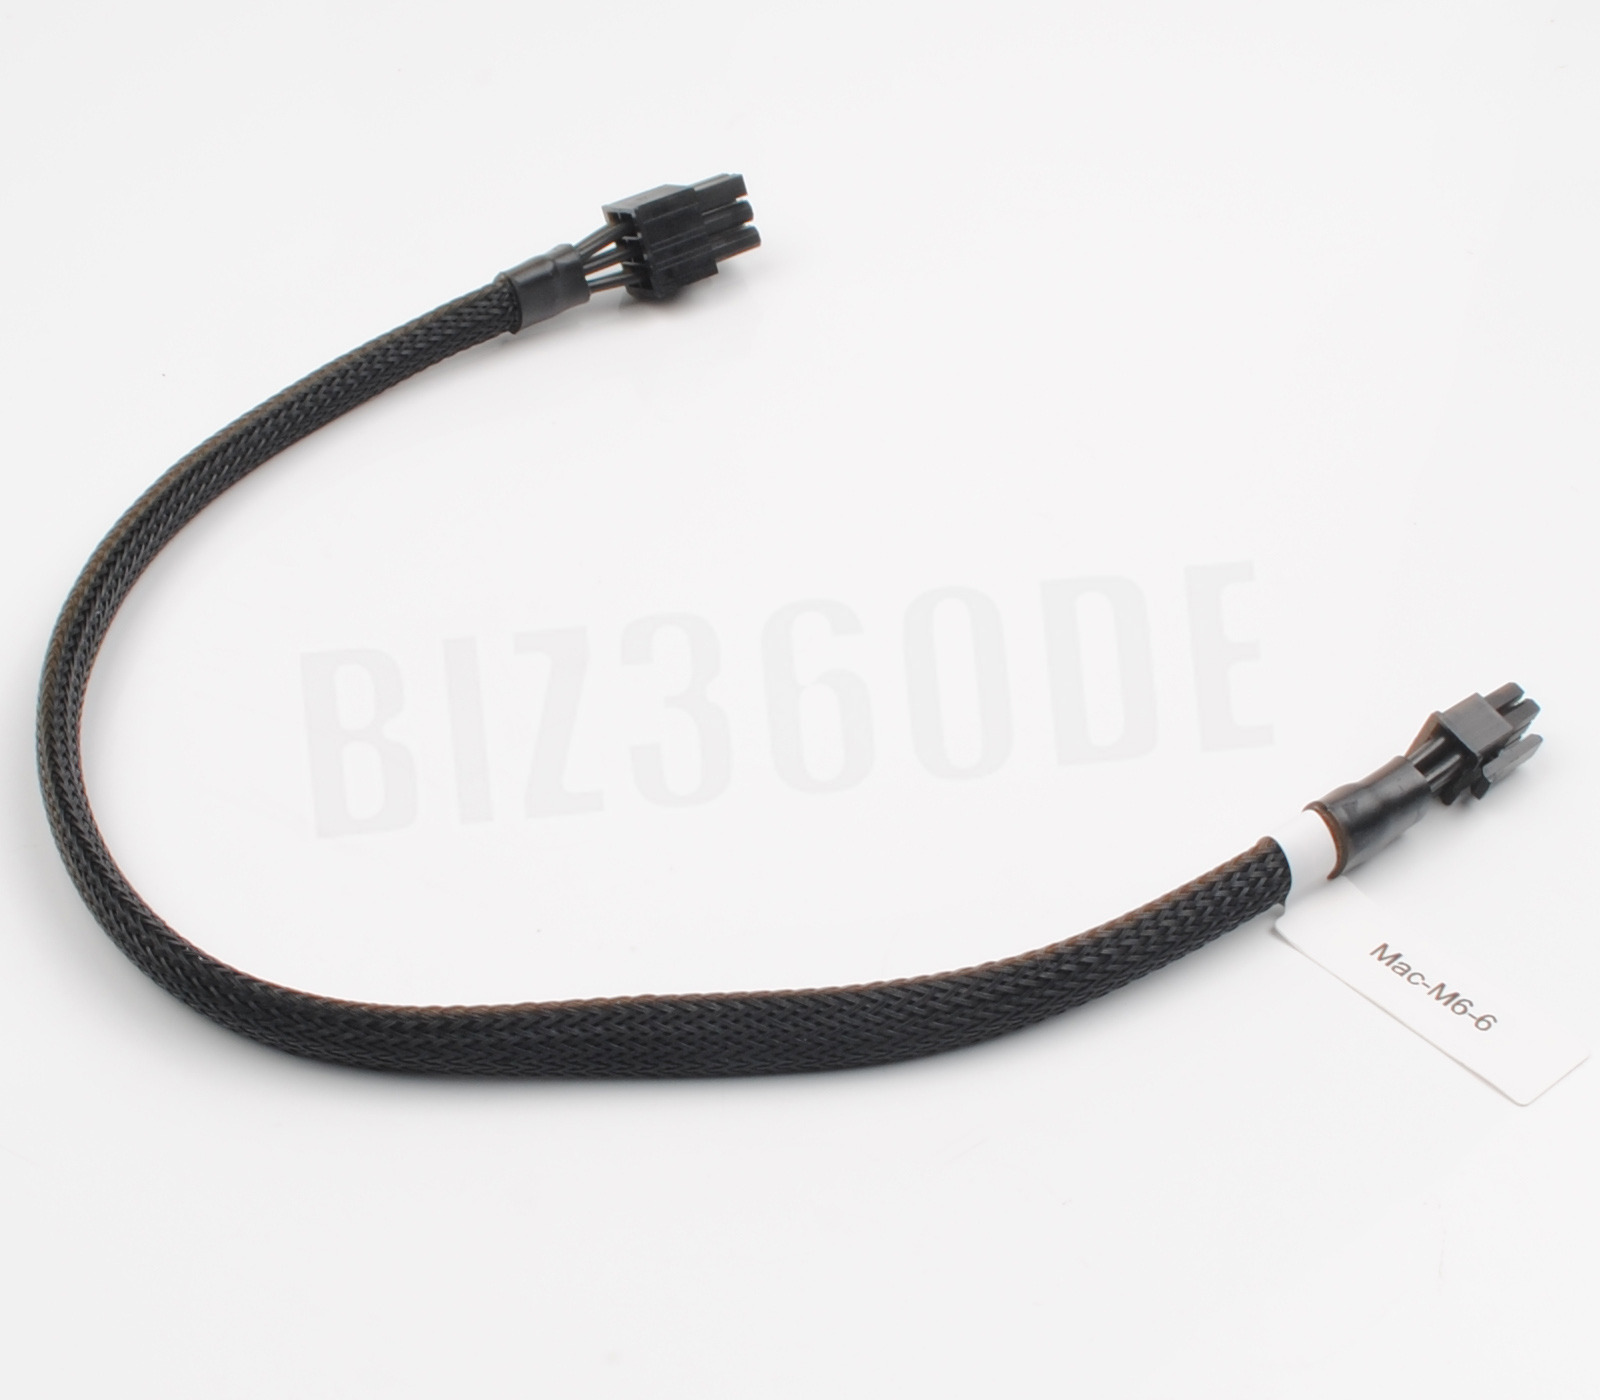 Für Apple Mac pro PCIe GPU Grafik Karte Strom Kabel - power cable - 6 pin sechs